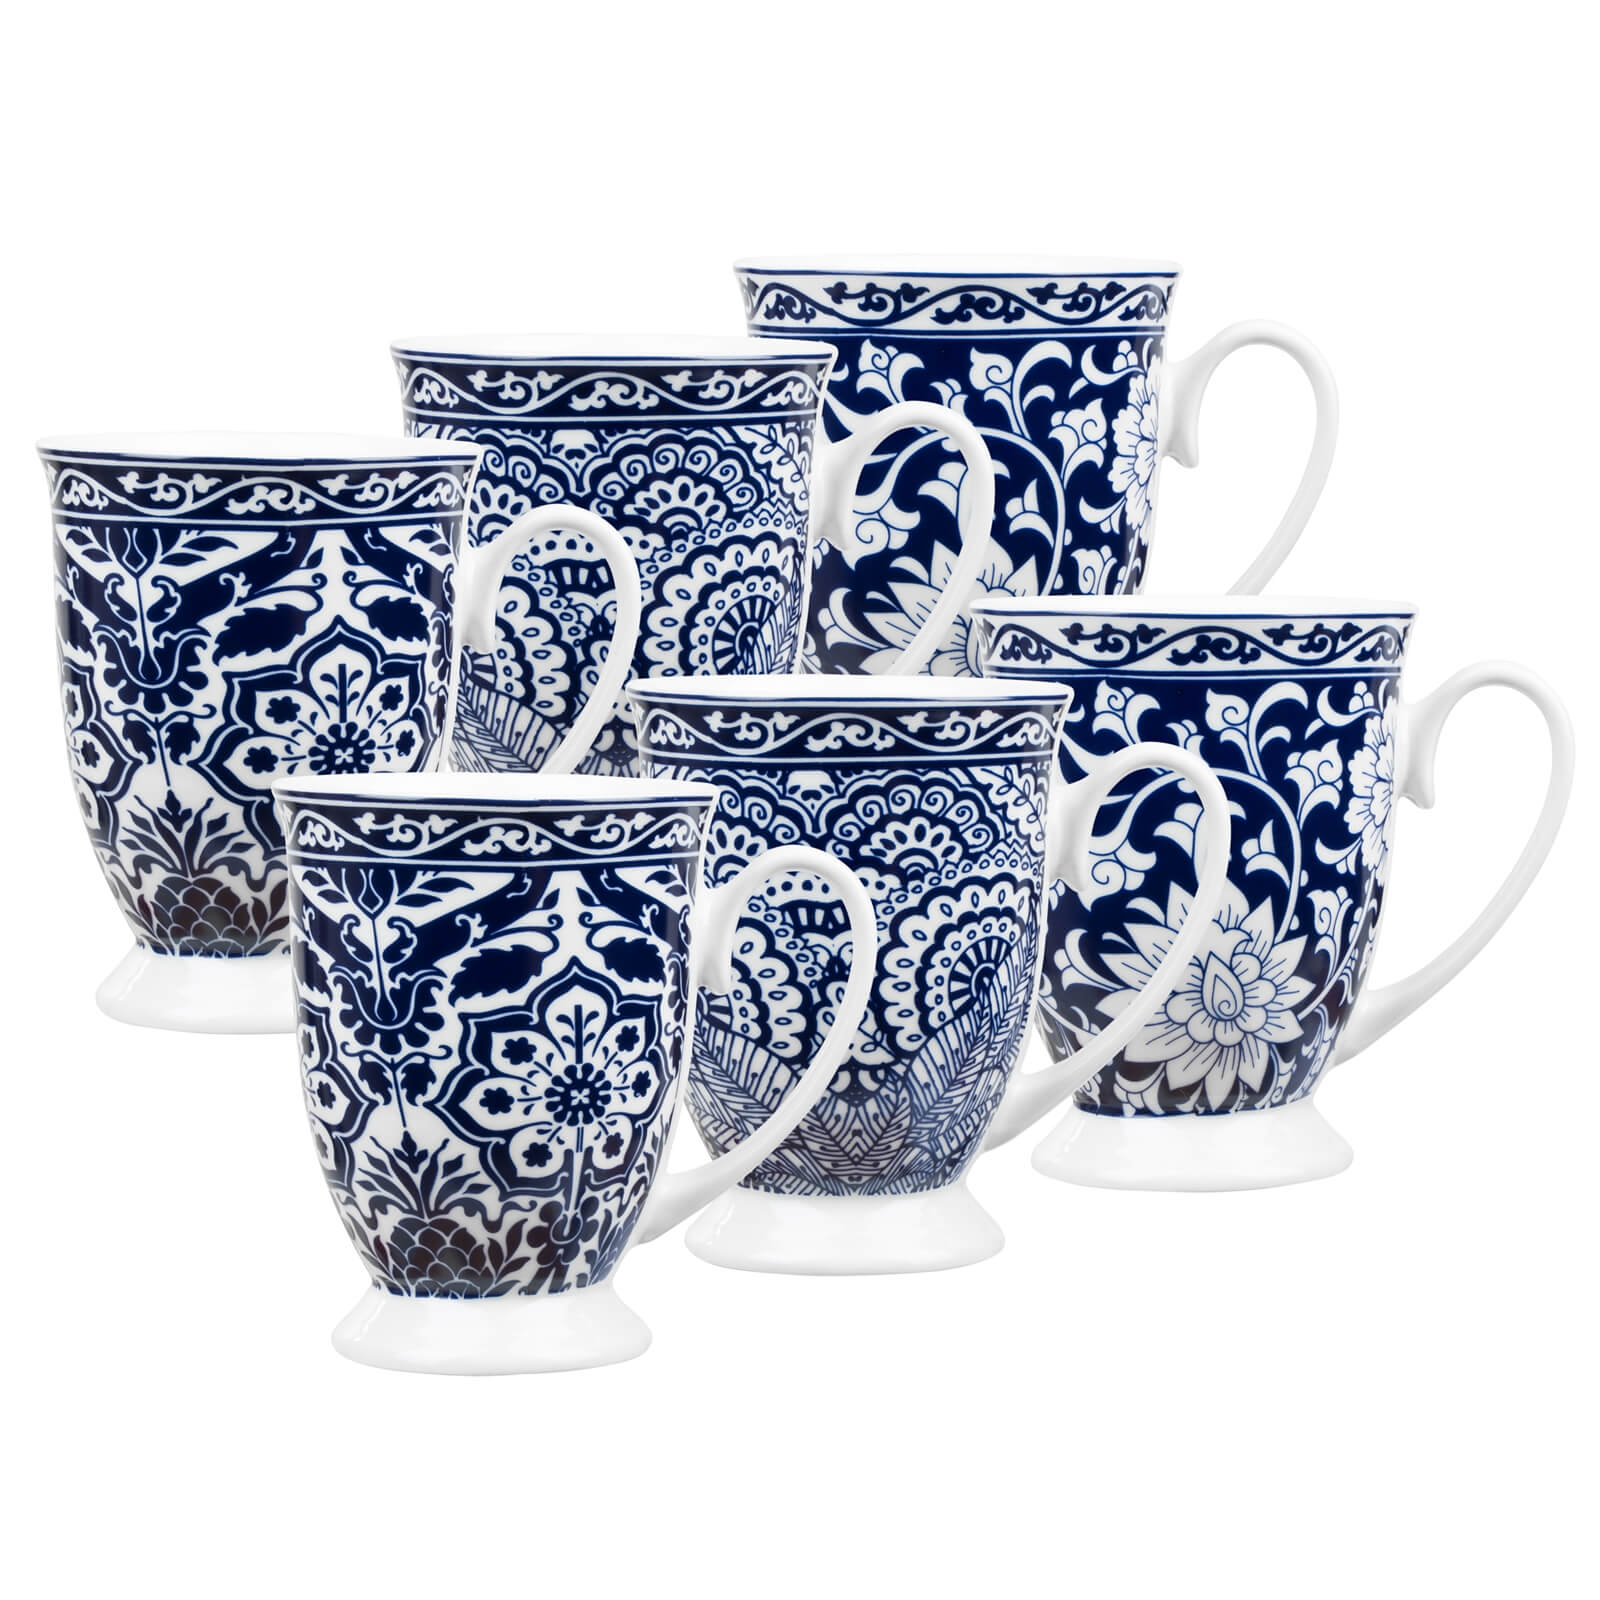 Blue White Footed Mugs - 6 Piece Set